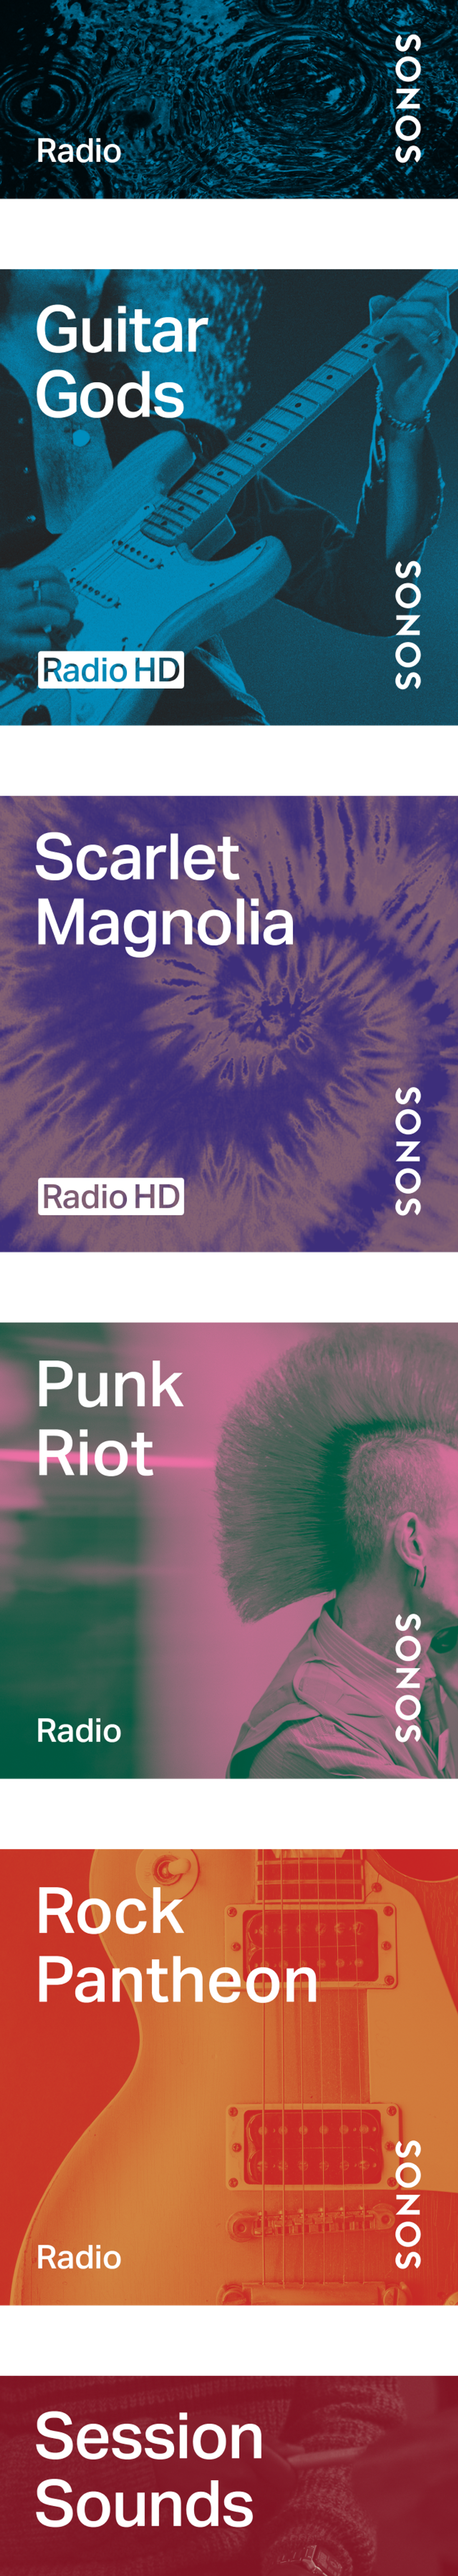 Stations Sonos Radio